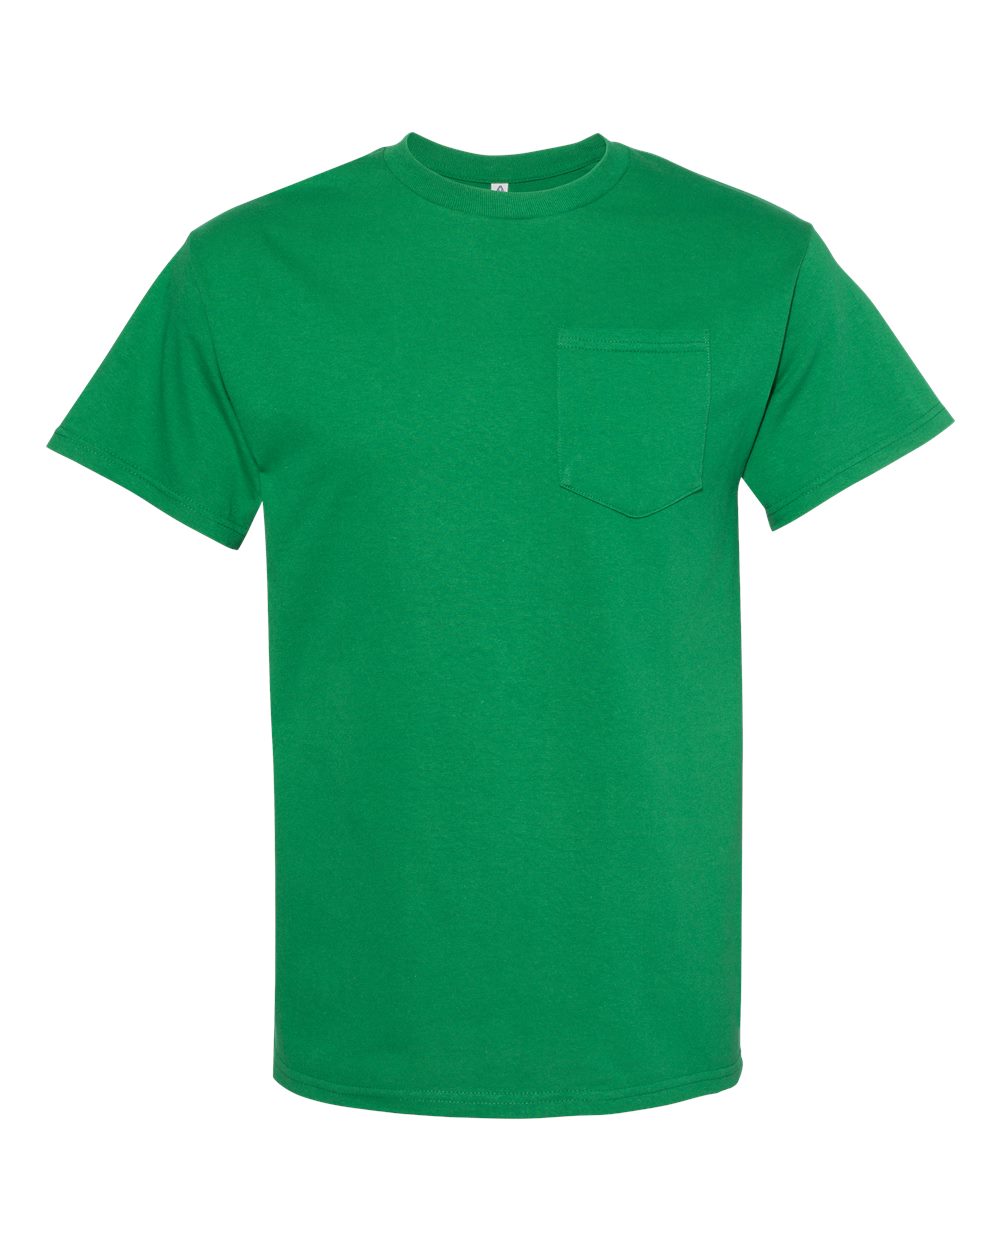 ALSTYLE - Heavyweight Pocket T-Shirt - 1905 - Kelly - Large